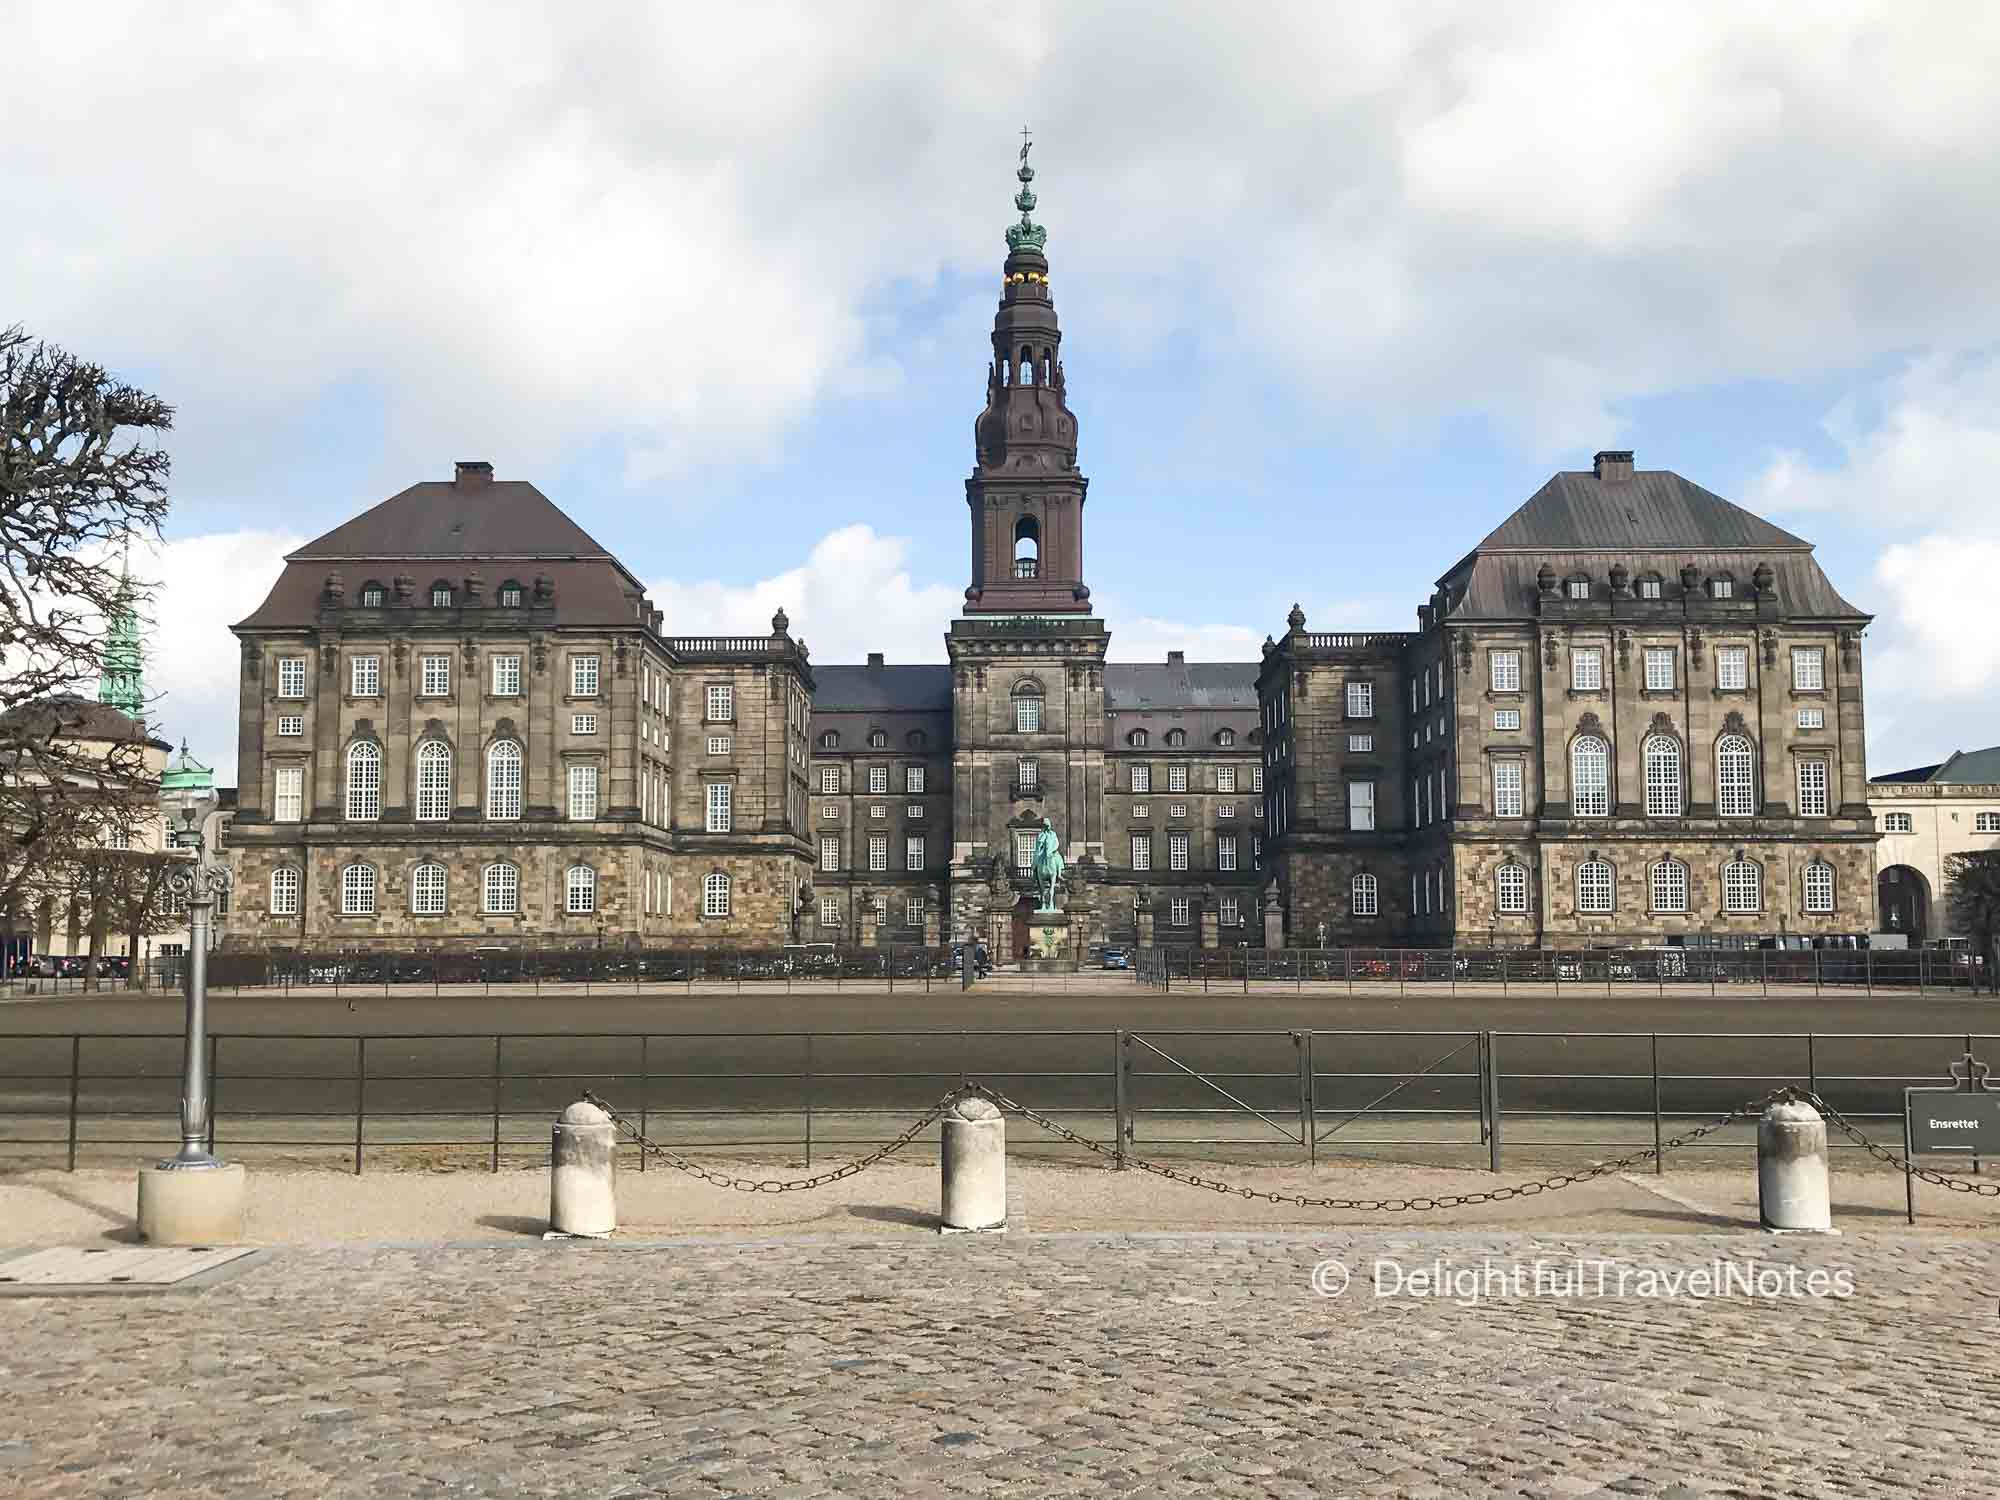 Facade of Christianborg Palace in Copenhagen.